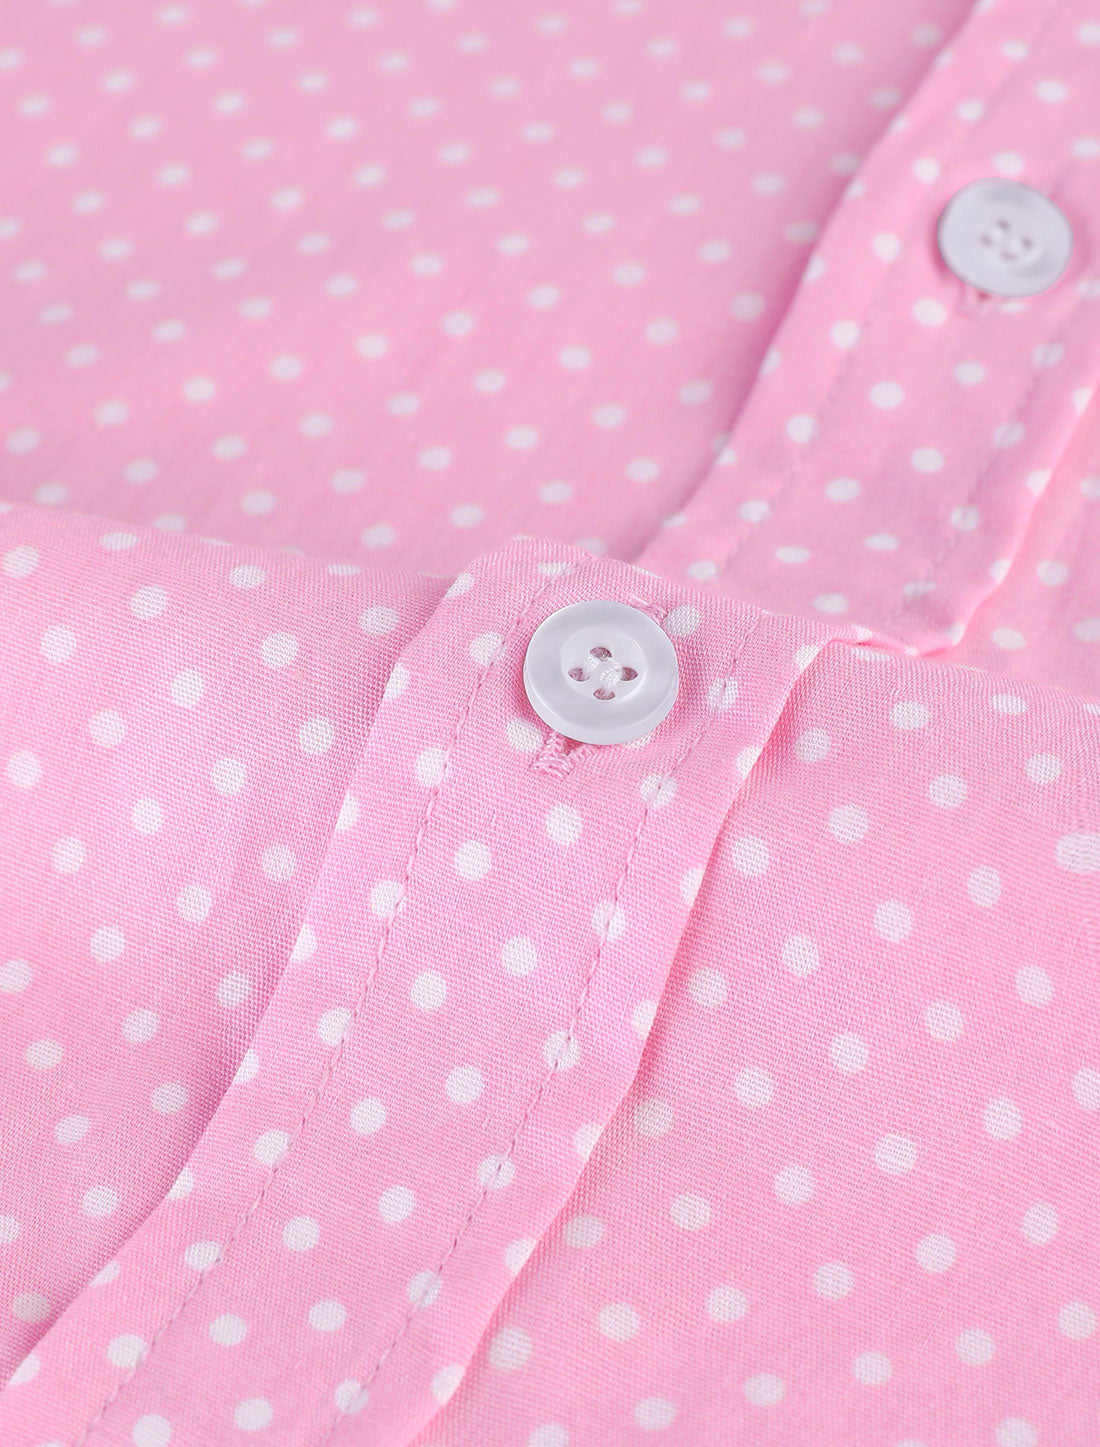 Bublédon Smart Casual Long Sleeve Polka Dots Button Shirt